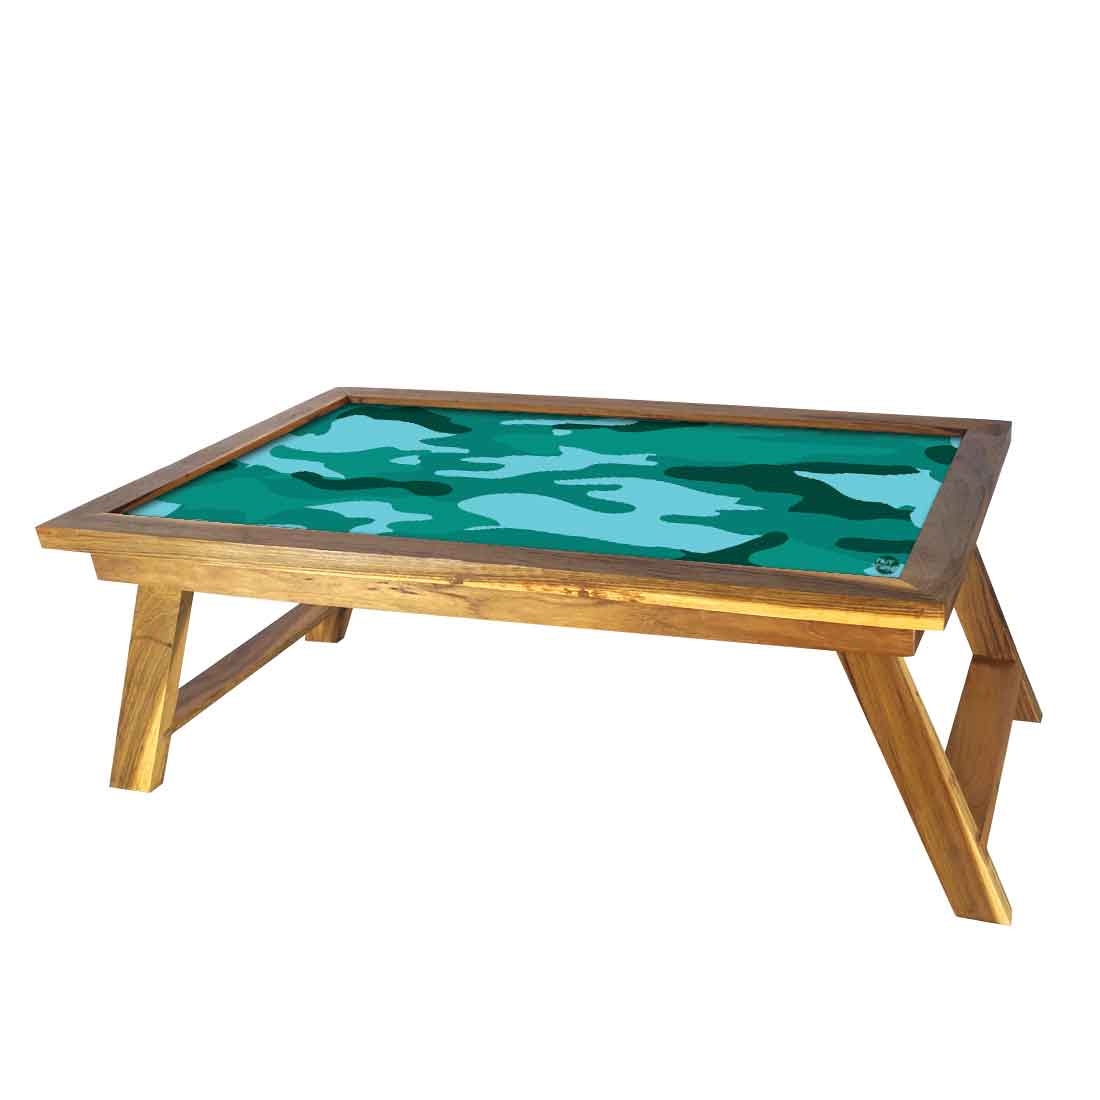 Nutcase Designer Lapdesk Breakfast Bed Table-Foldable Teak Wooden Study Desk - Army Camouflage Green Nutcase